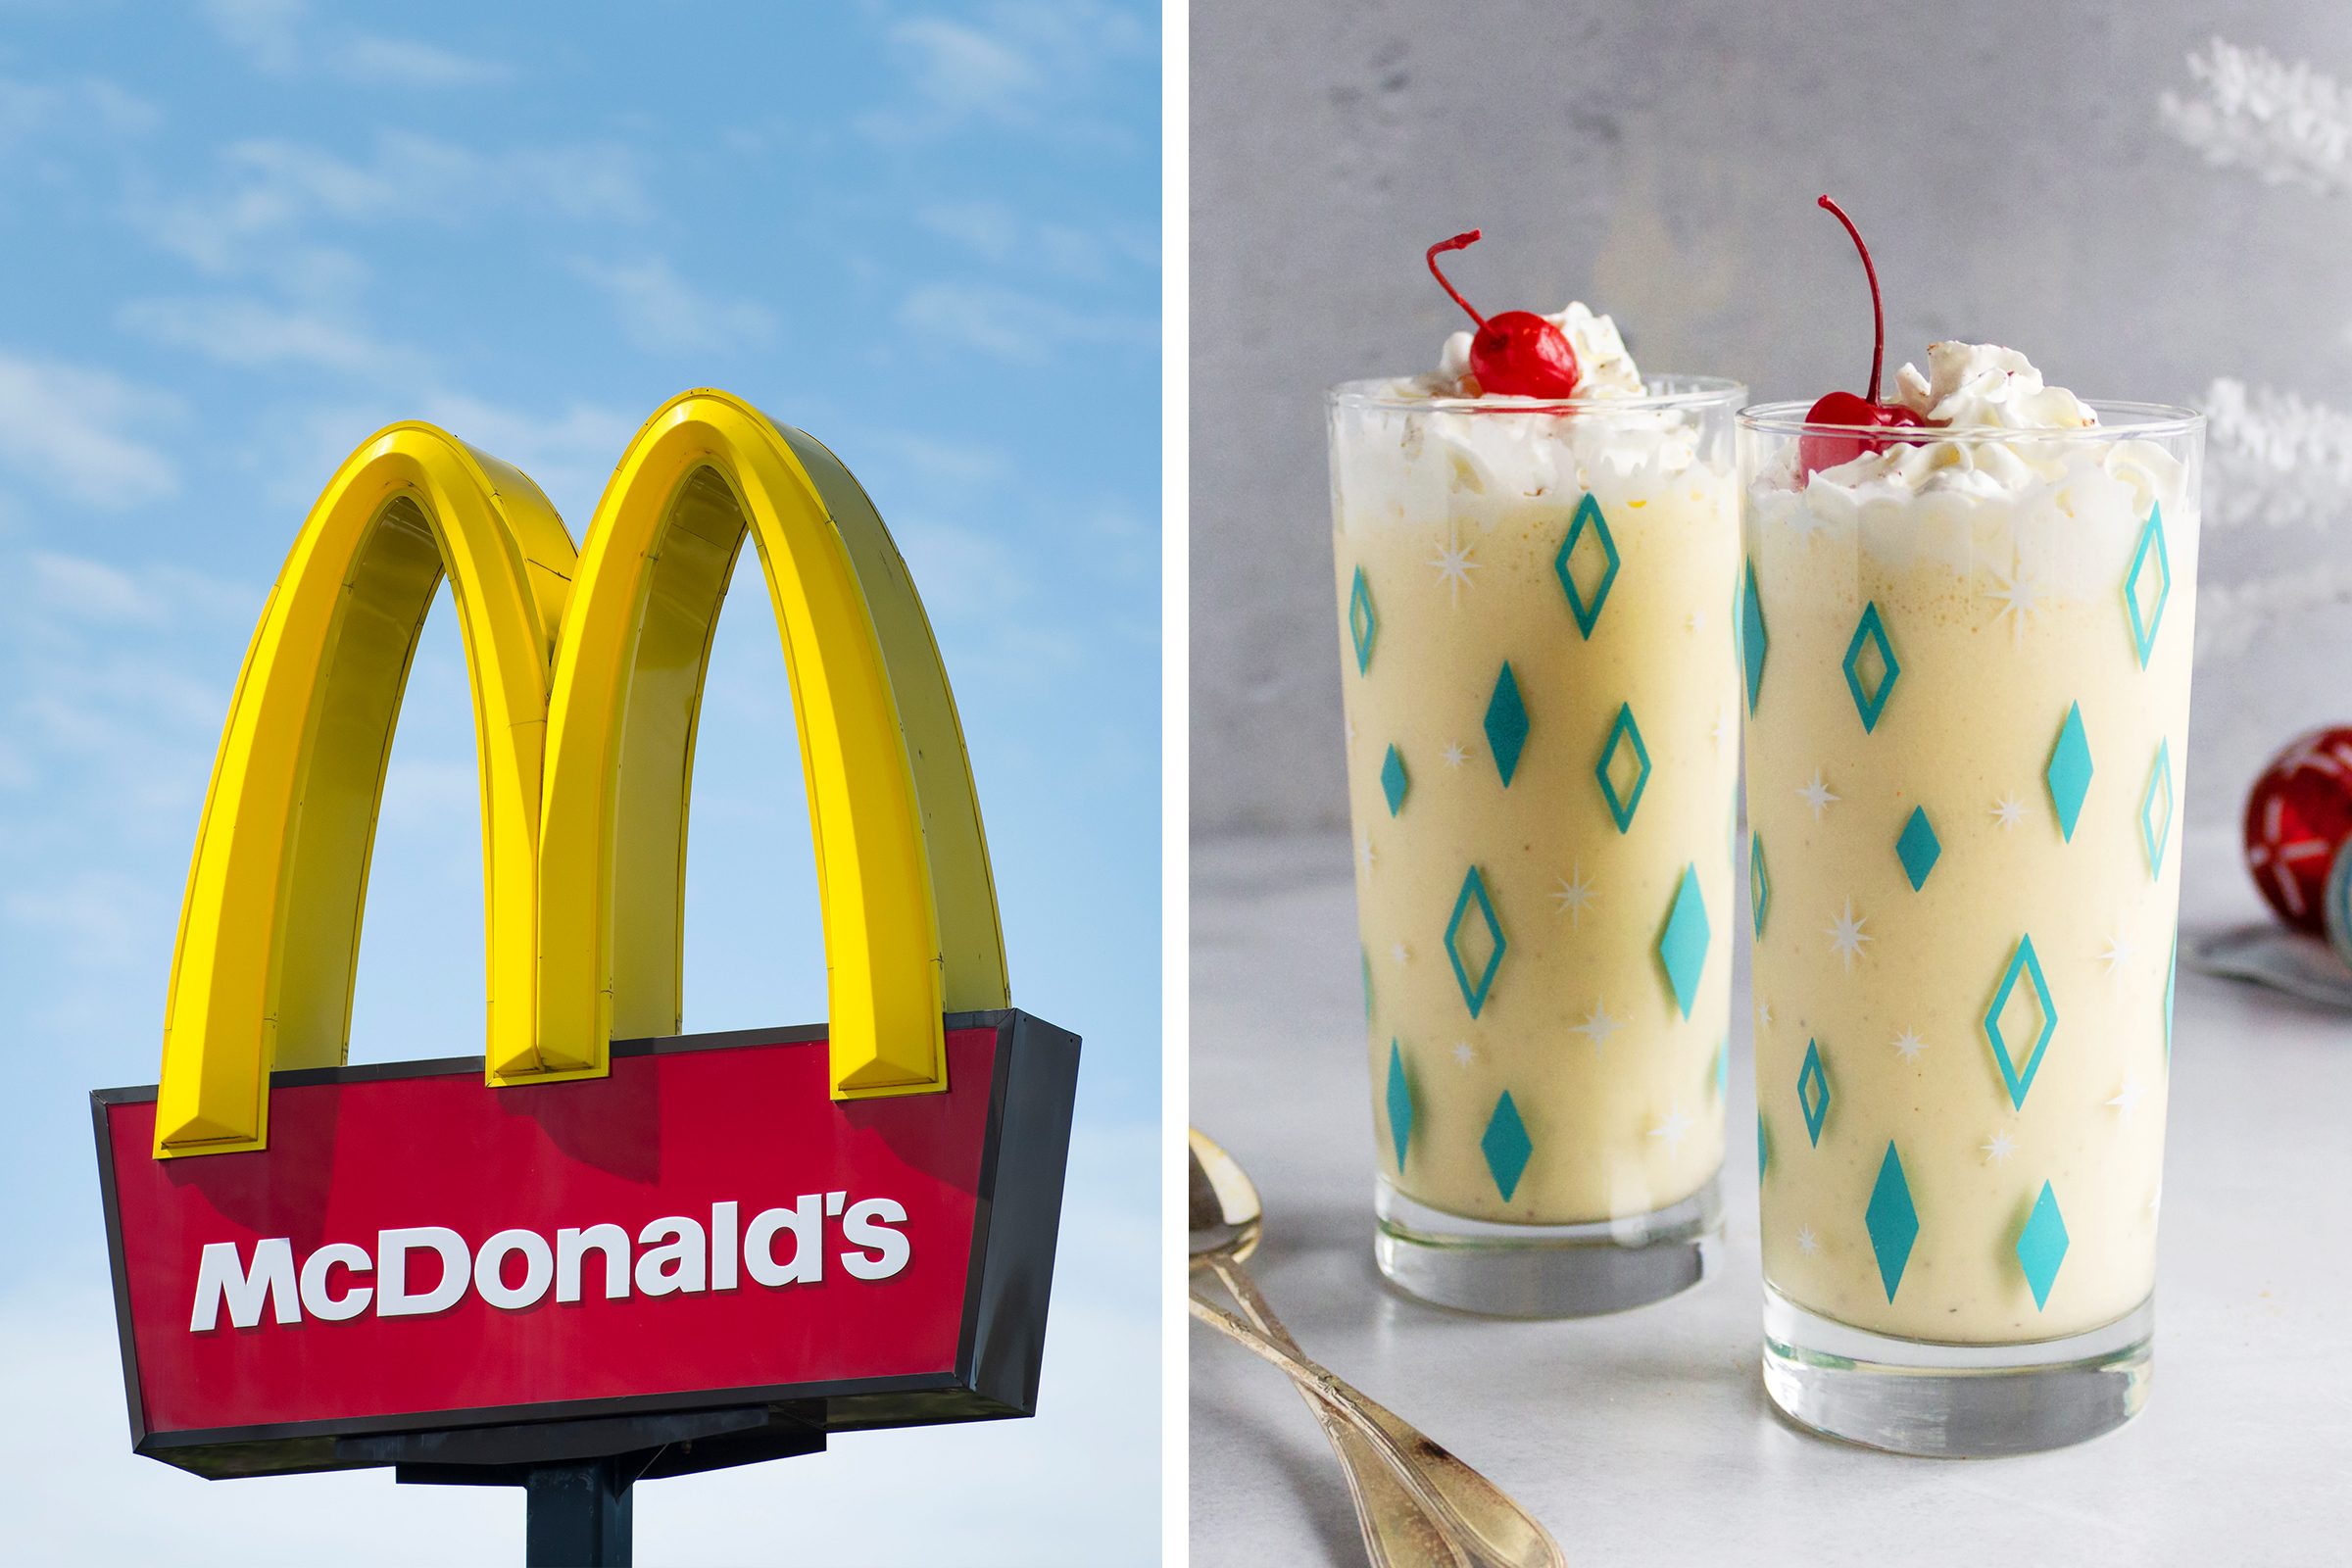 McDonald's arches and McDonald's Copycat Eggnog Milkshake side by side